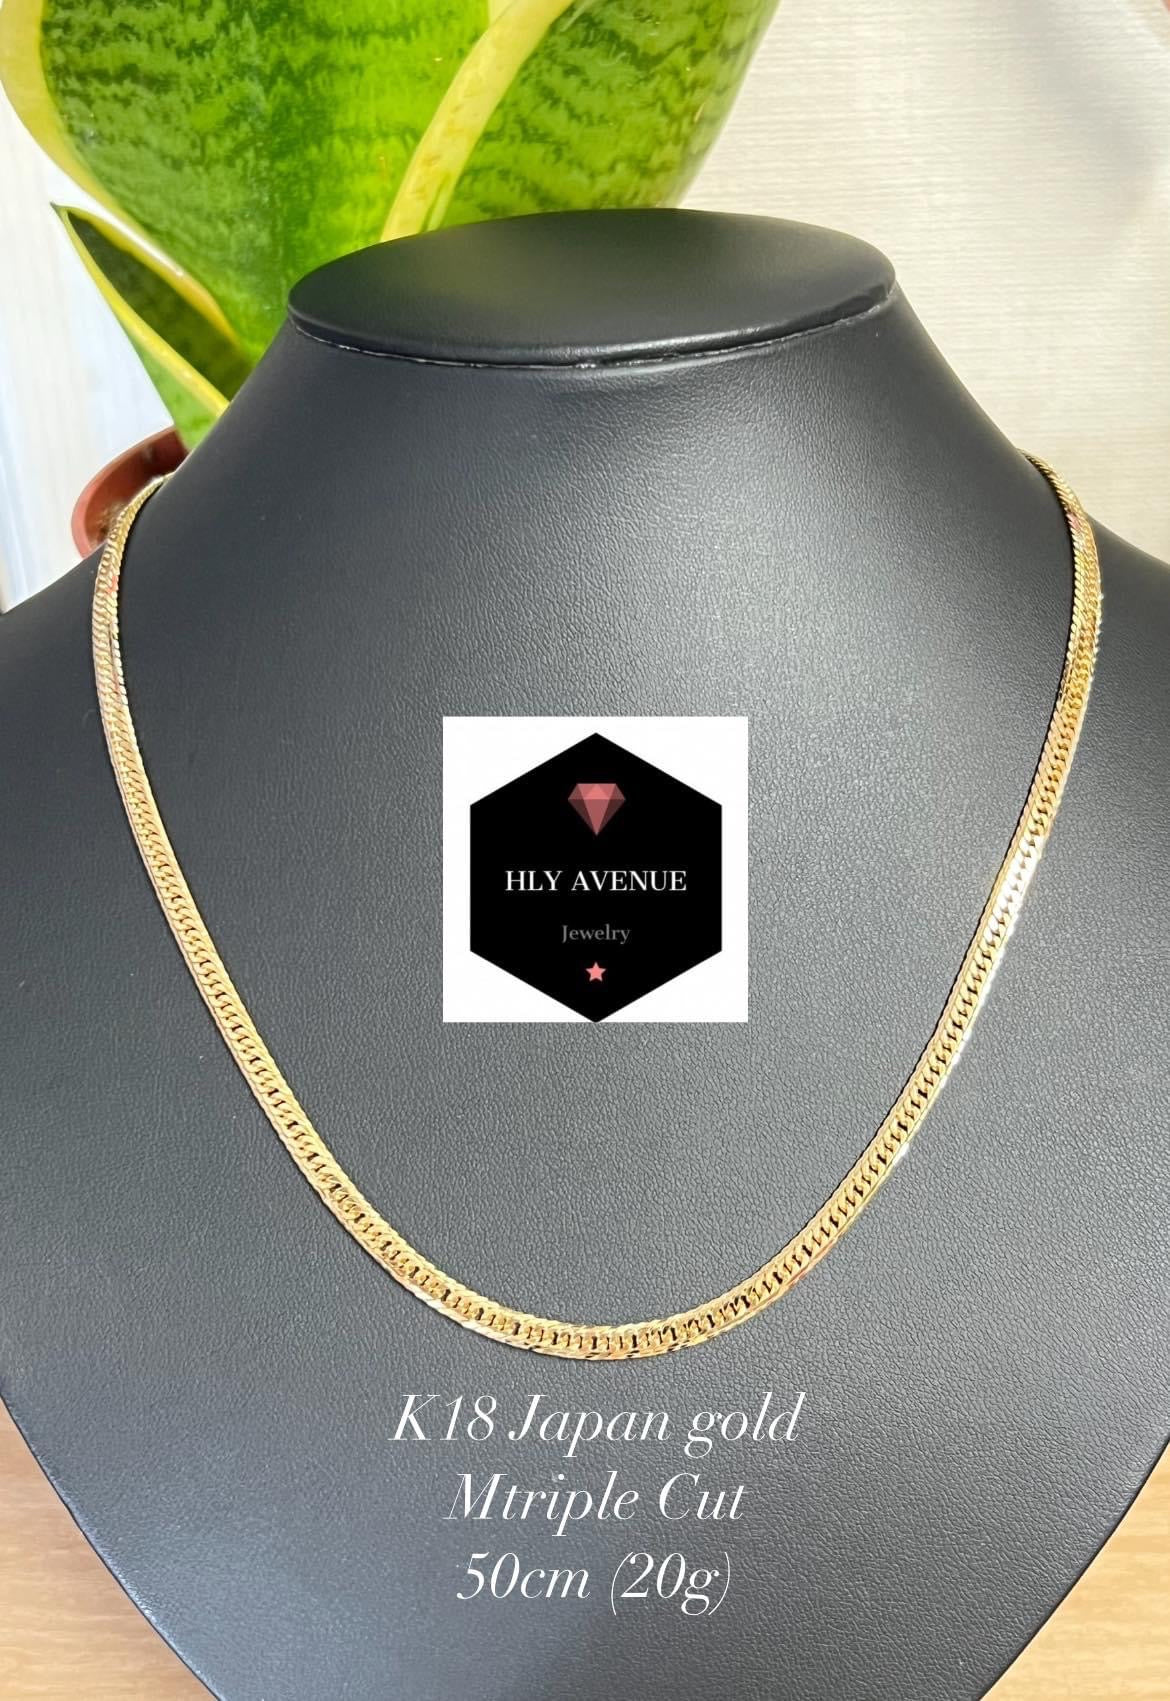 K18 Japan Gold MTriple Cut Kihei 50CM(20g) – HLY Avenue Jewelry